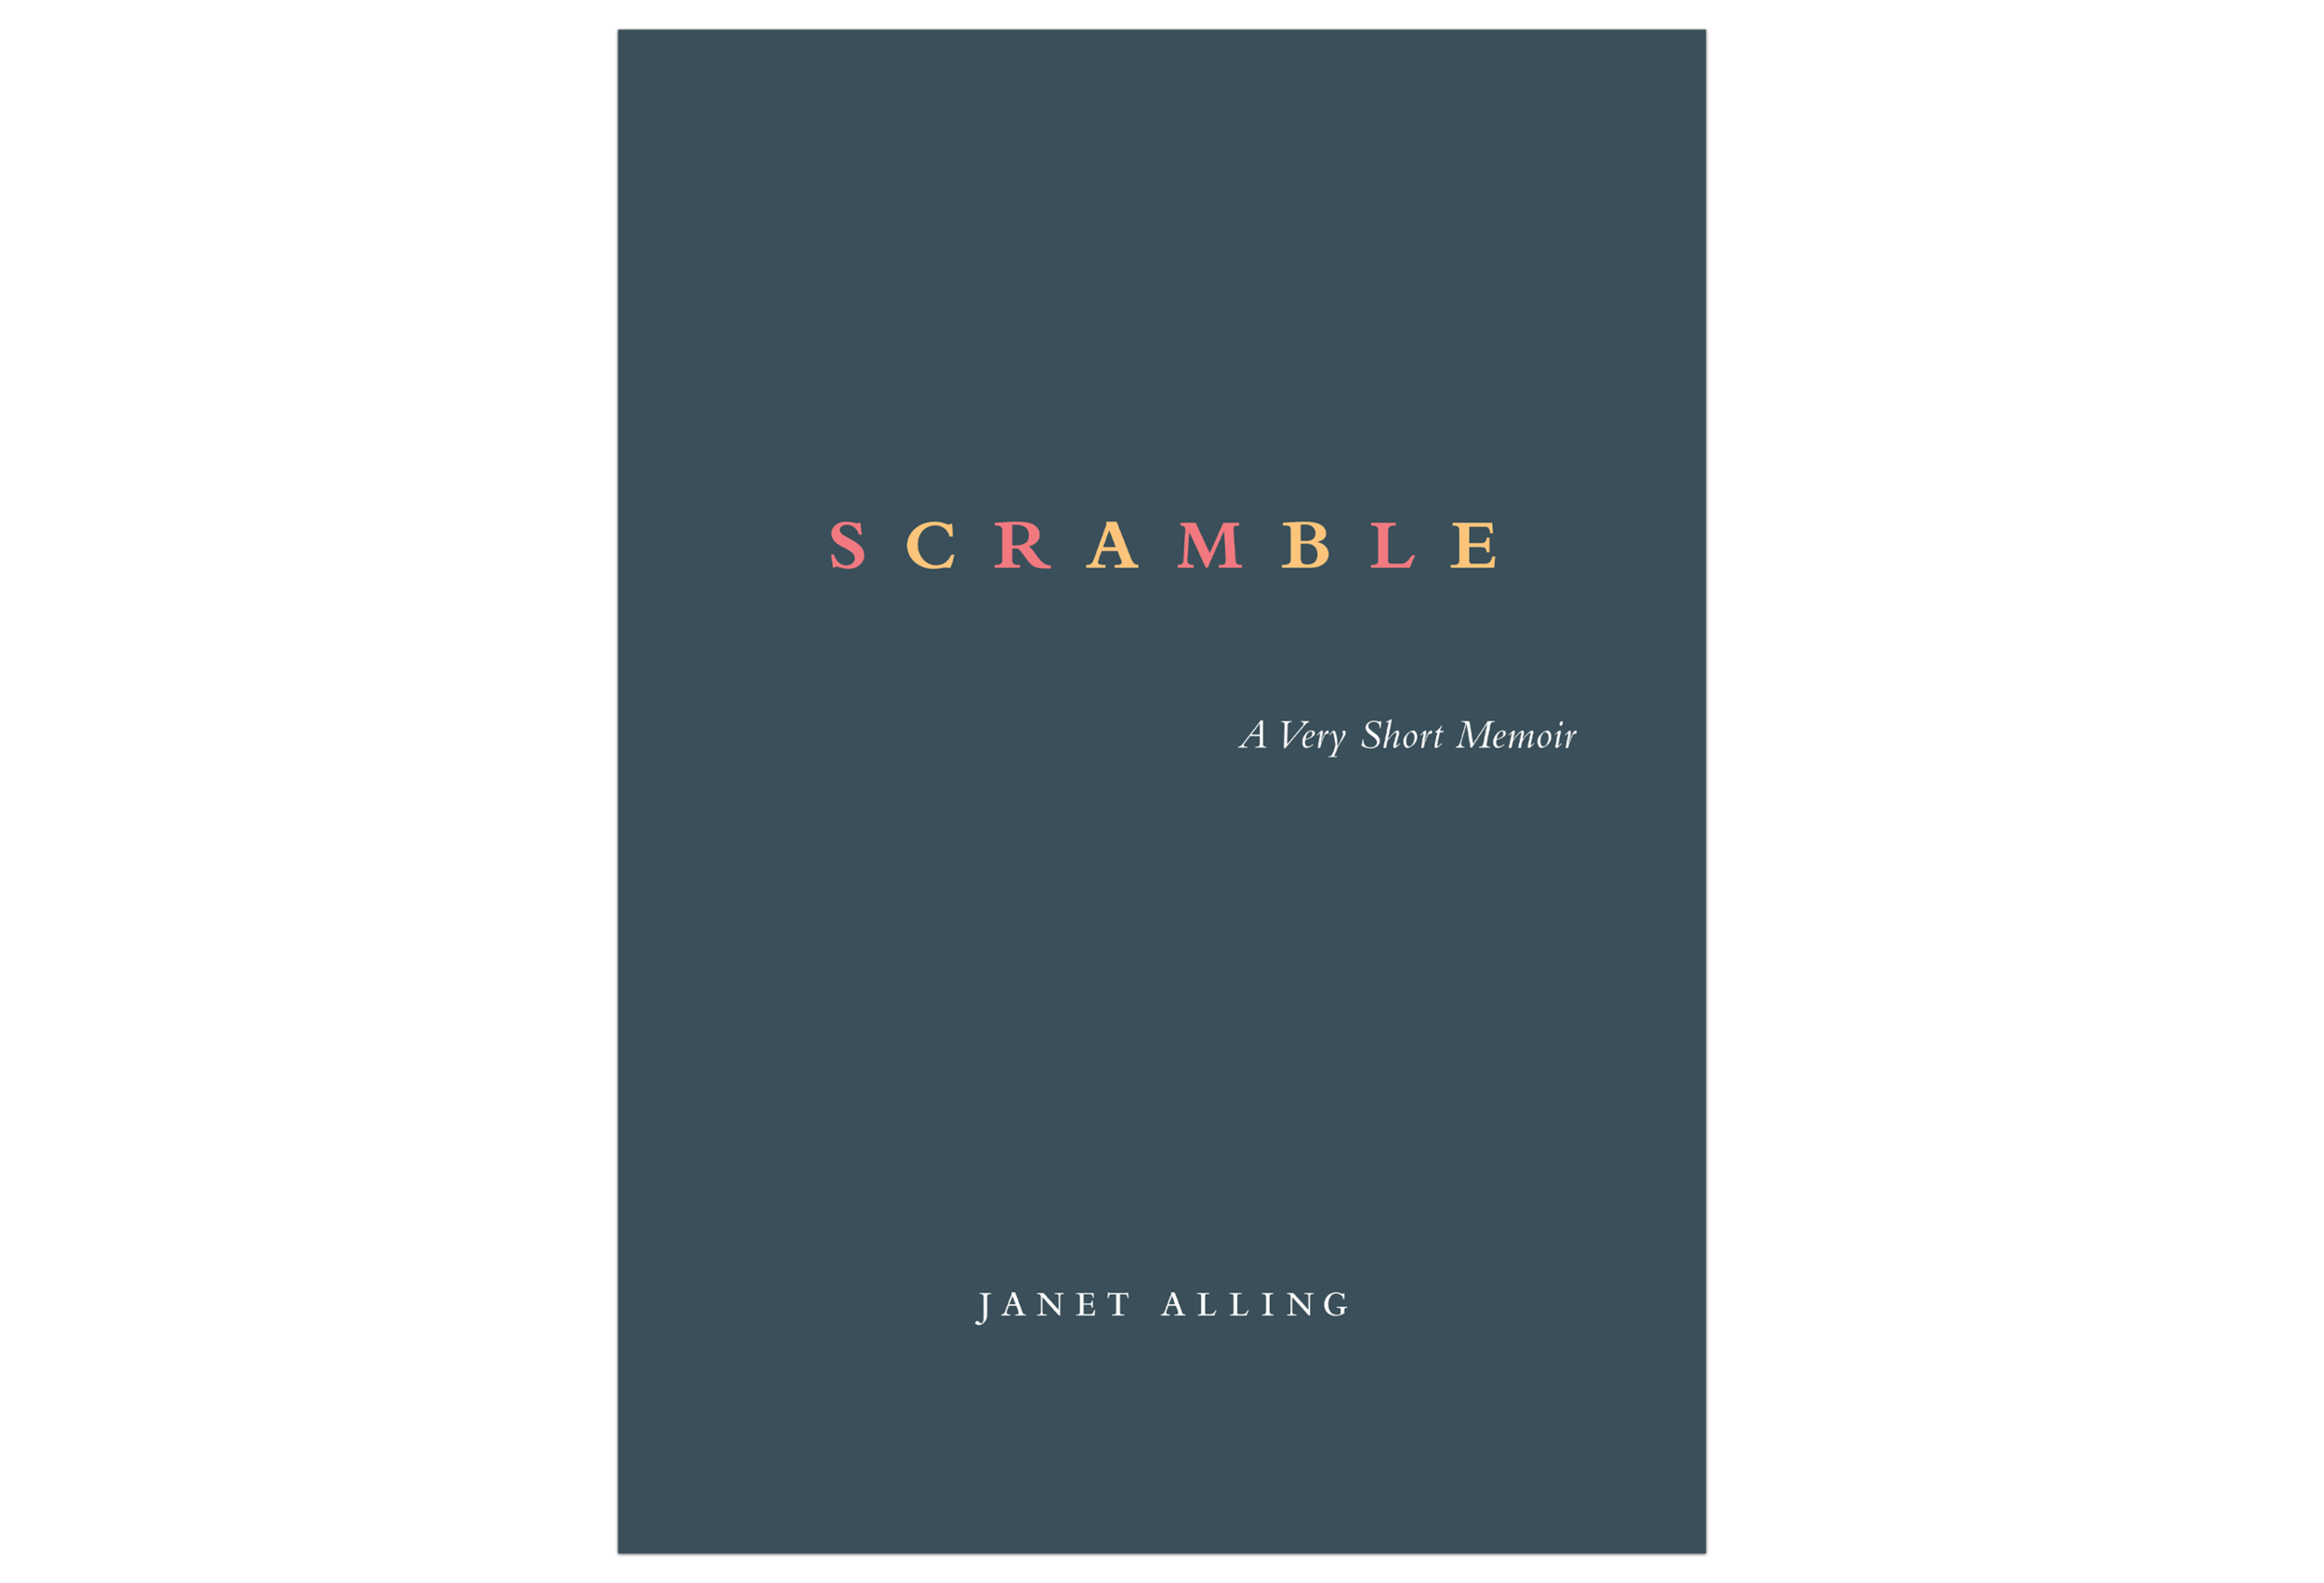 Janet-Alling-artist-Scramble-book.png